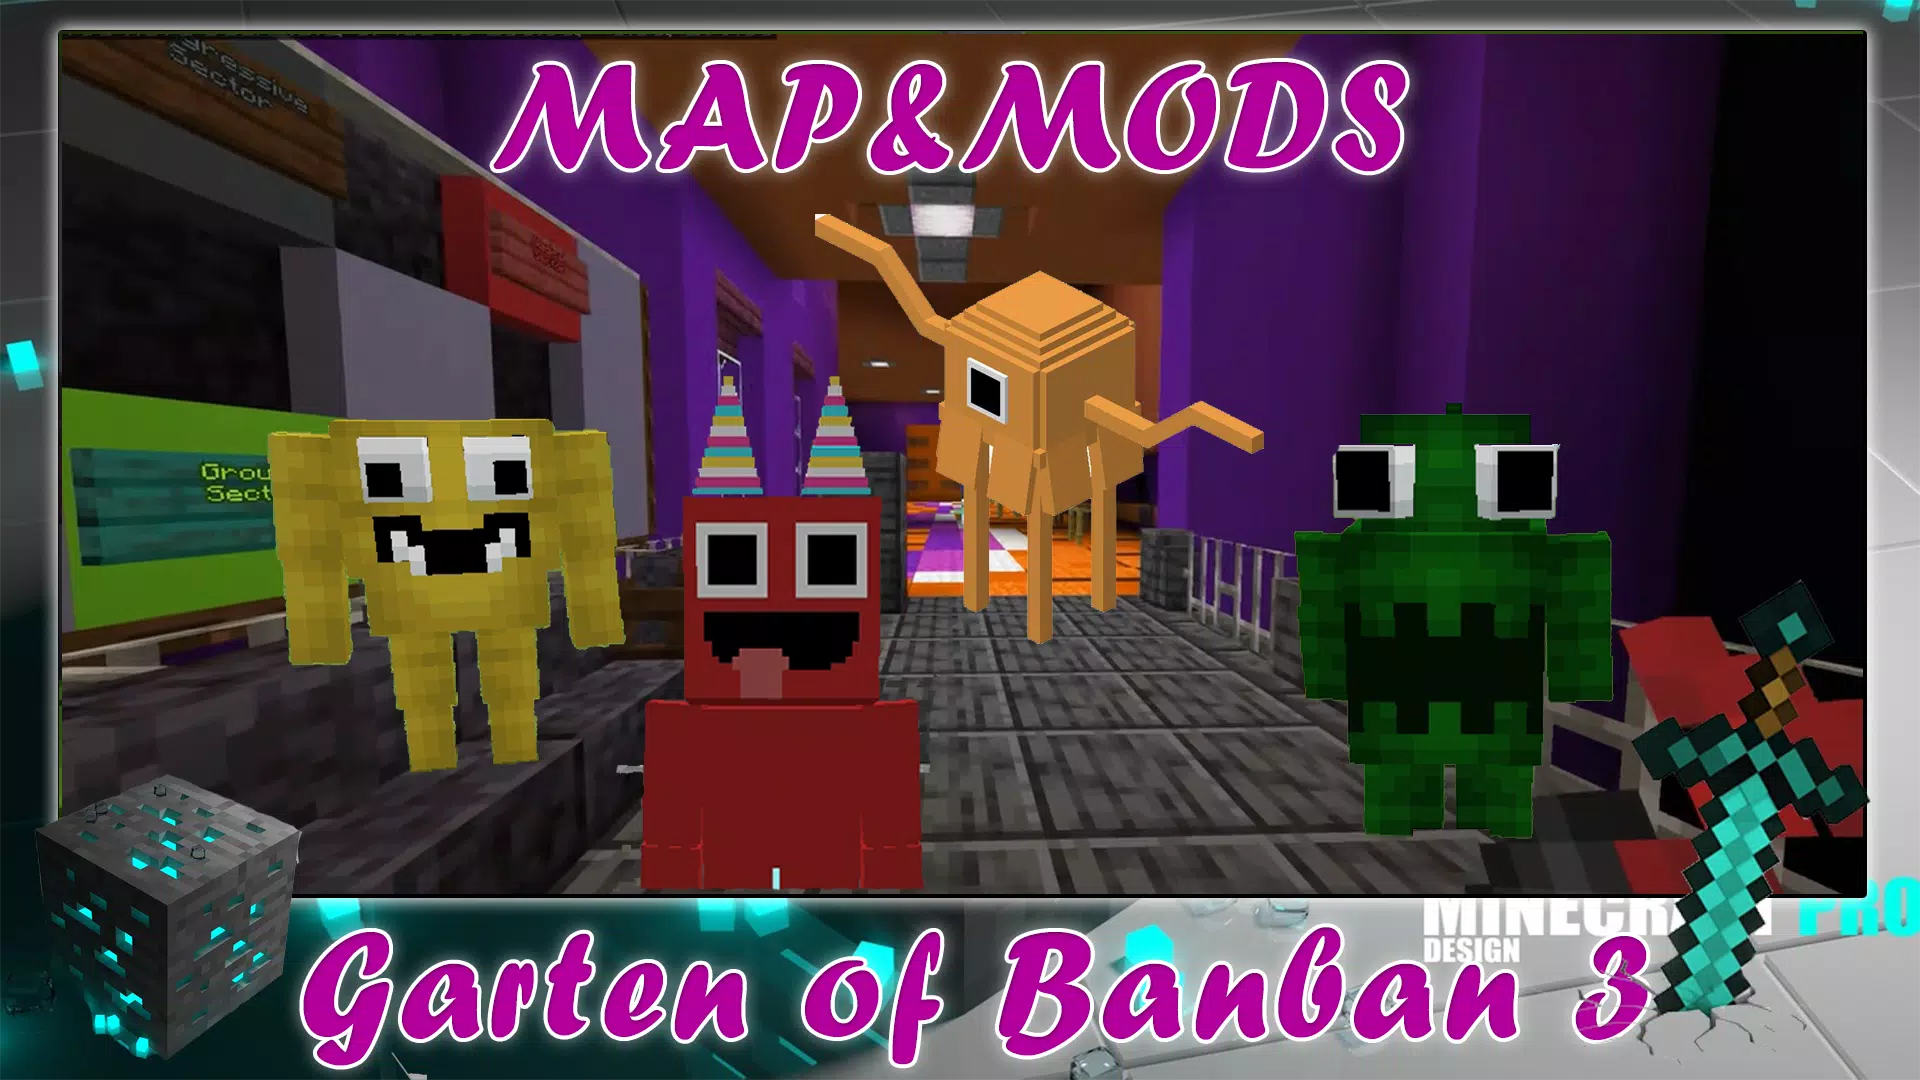 Garten of banban 3 Minecraft Map